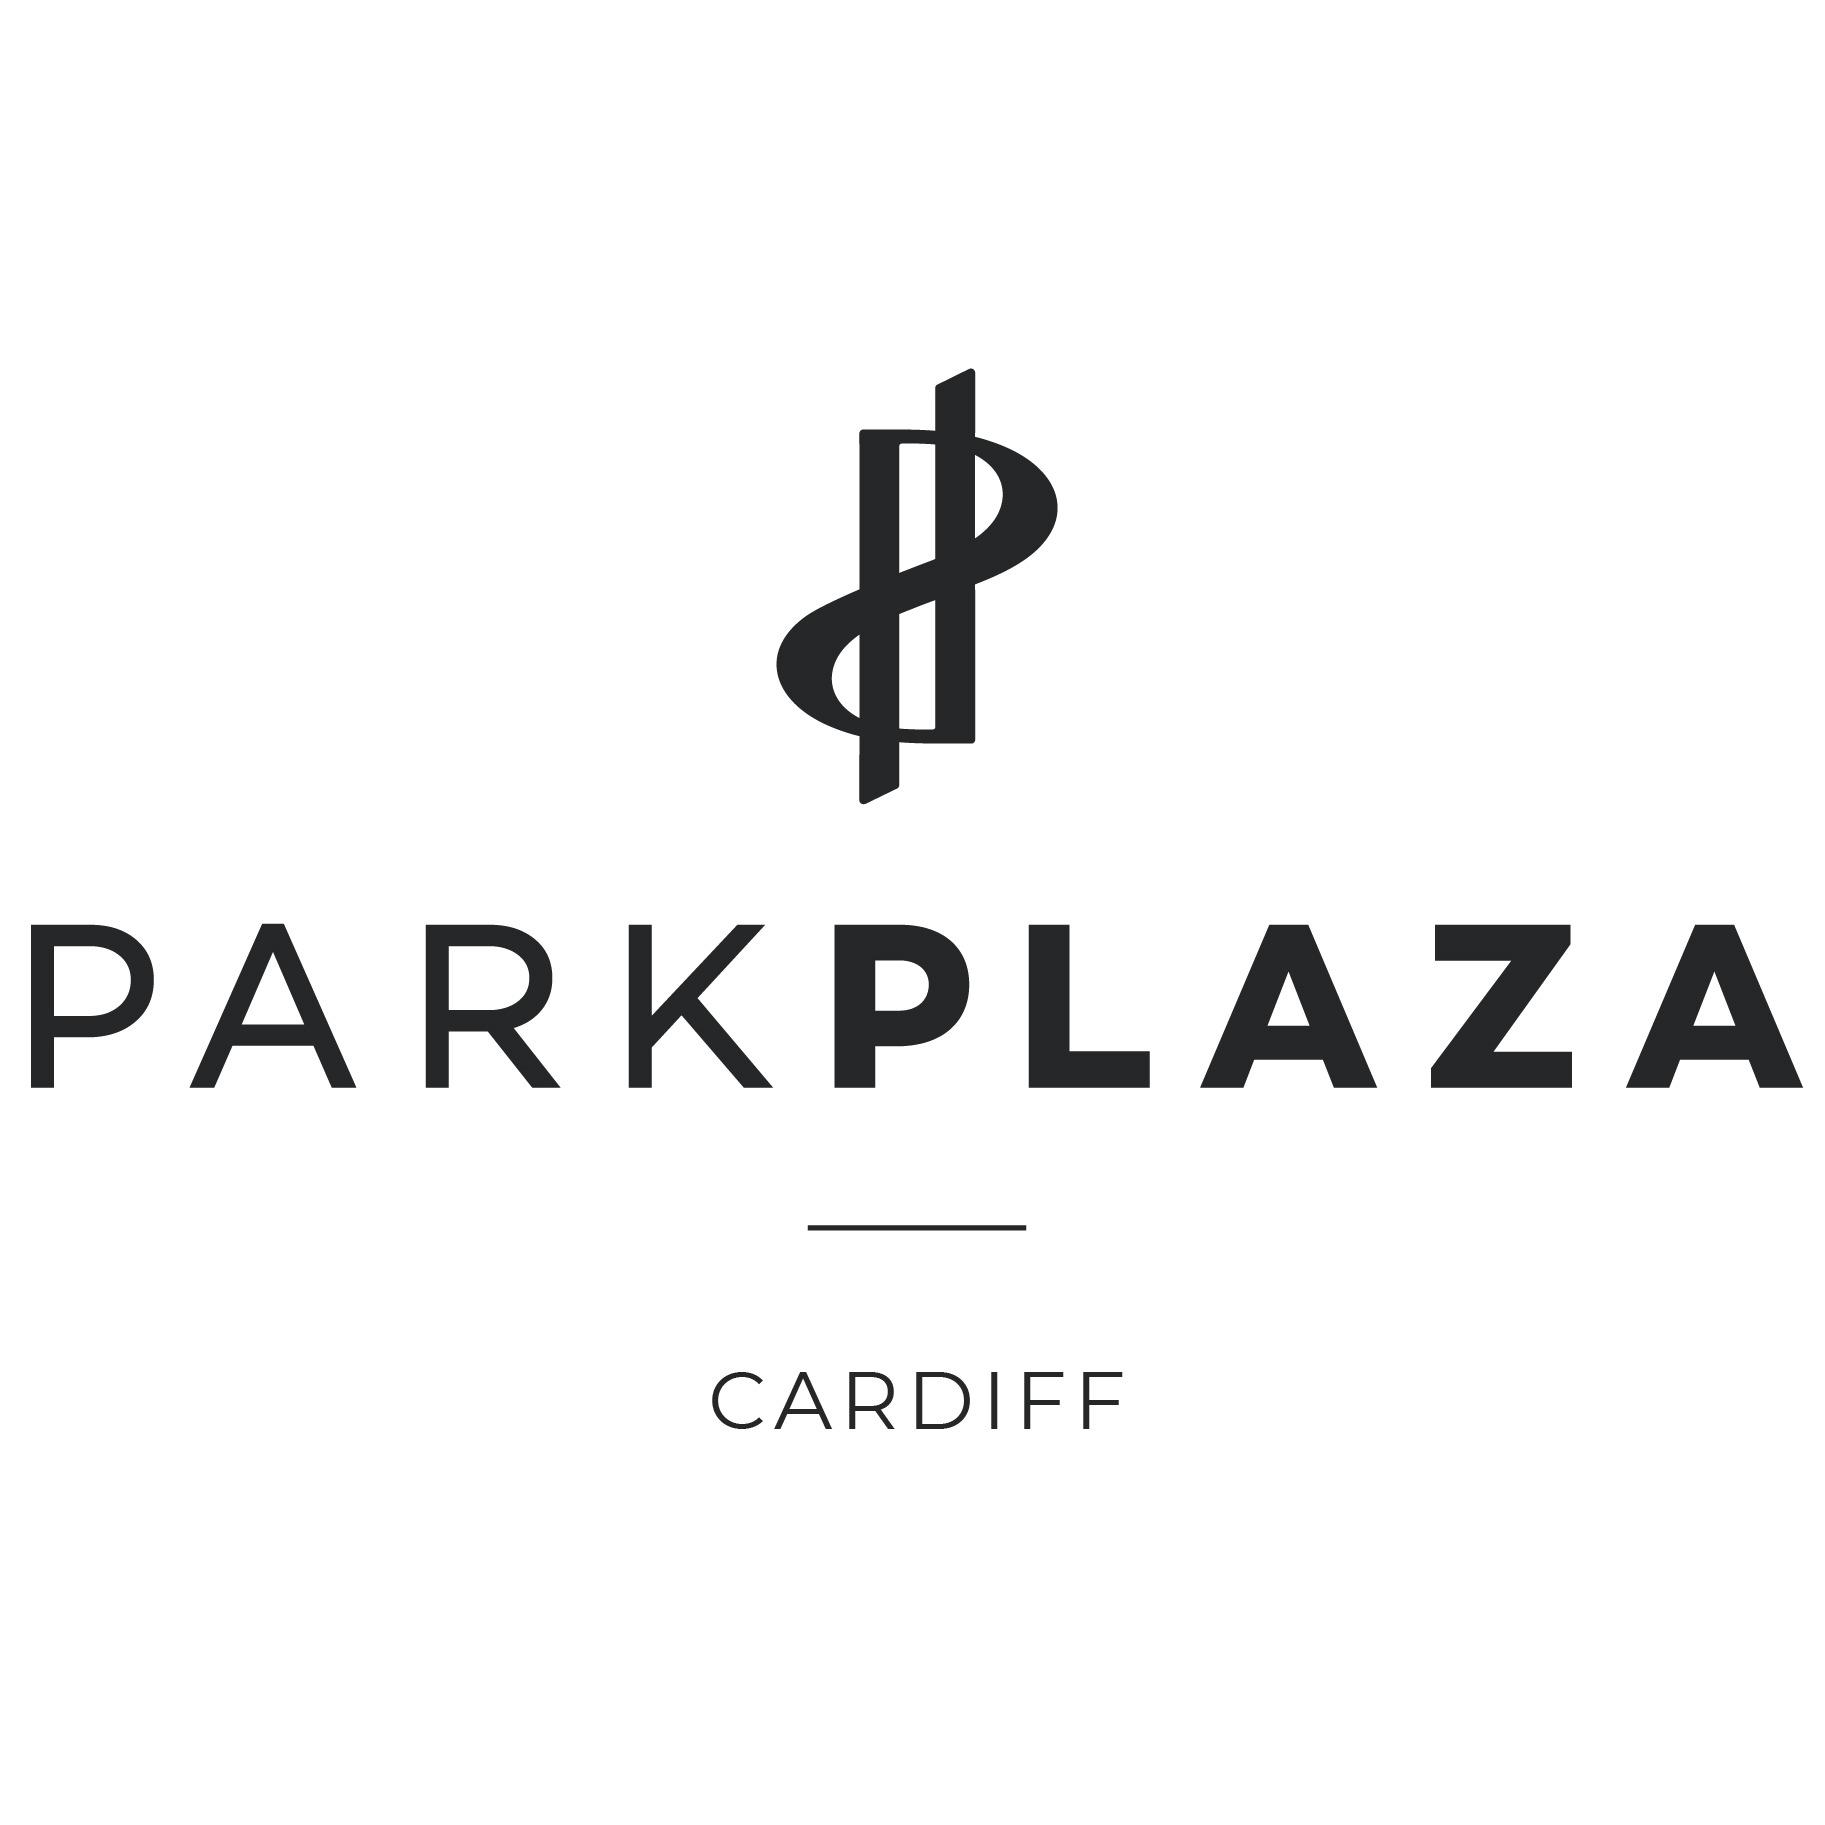 Park Plaza Cardiff - Cardiff, South Glamorgan CF10 3AL - 02920 111111 | ShowMeLocal.com